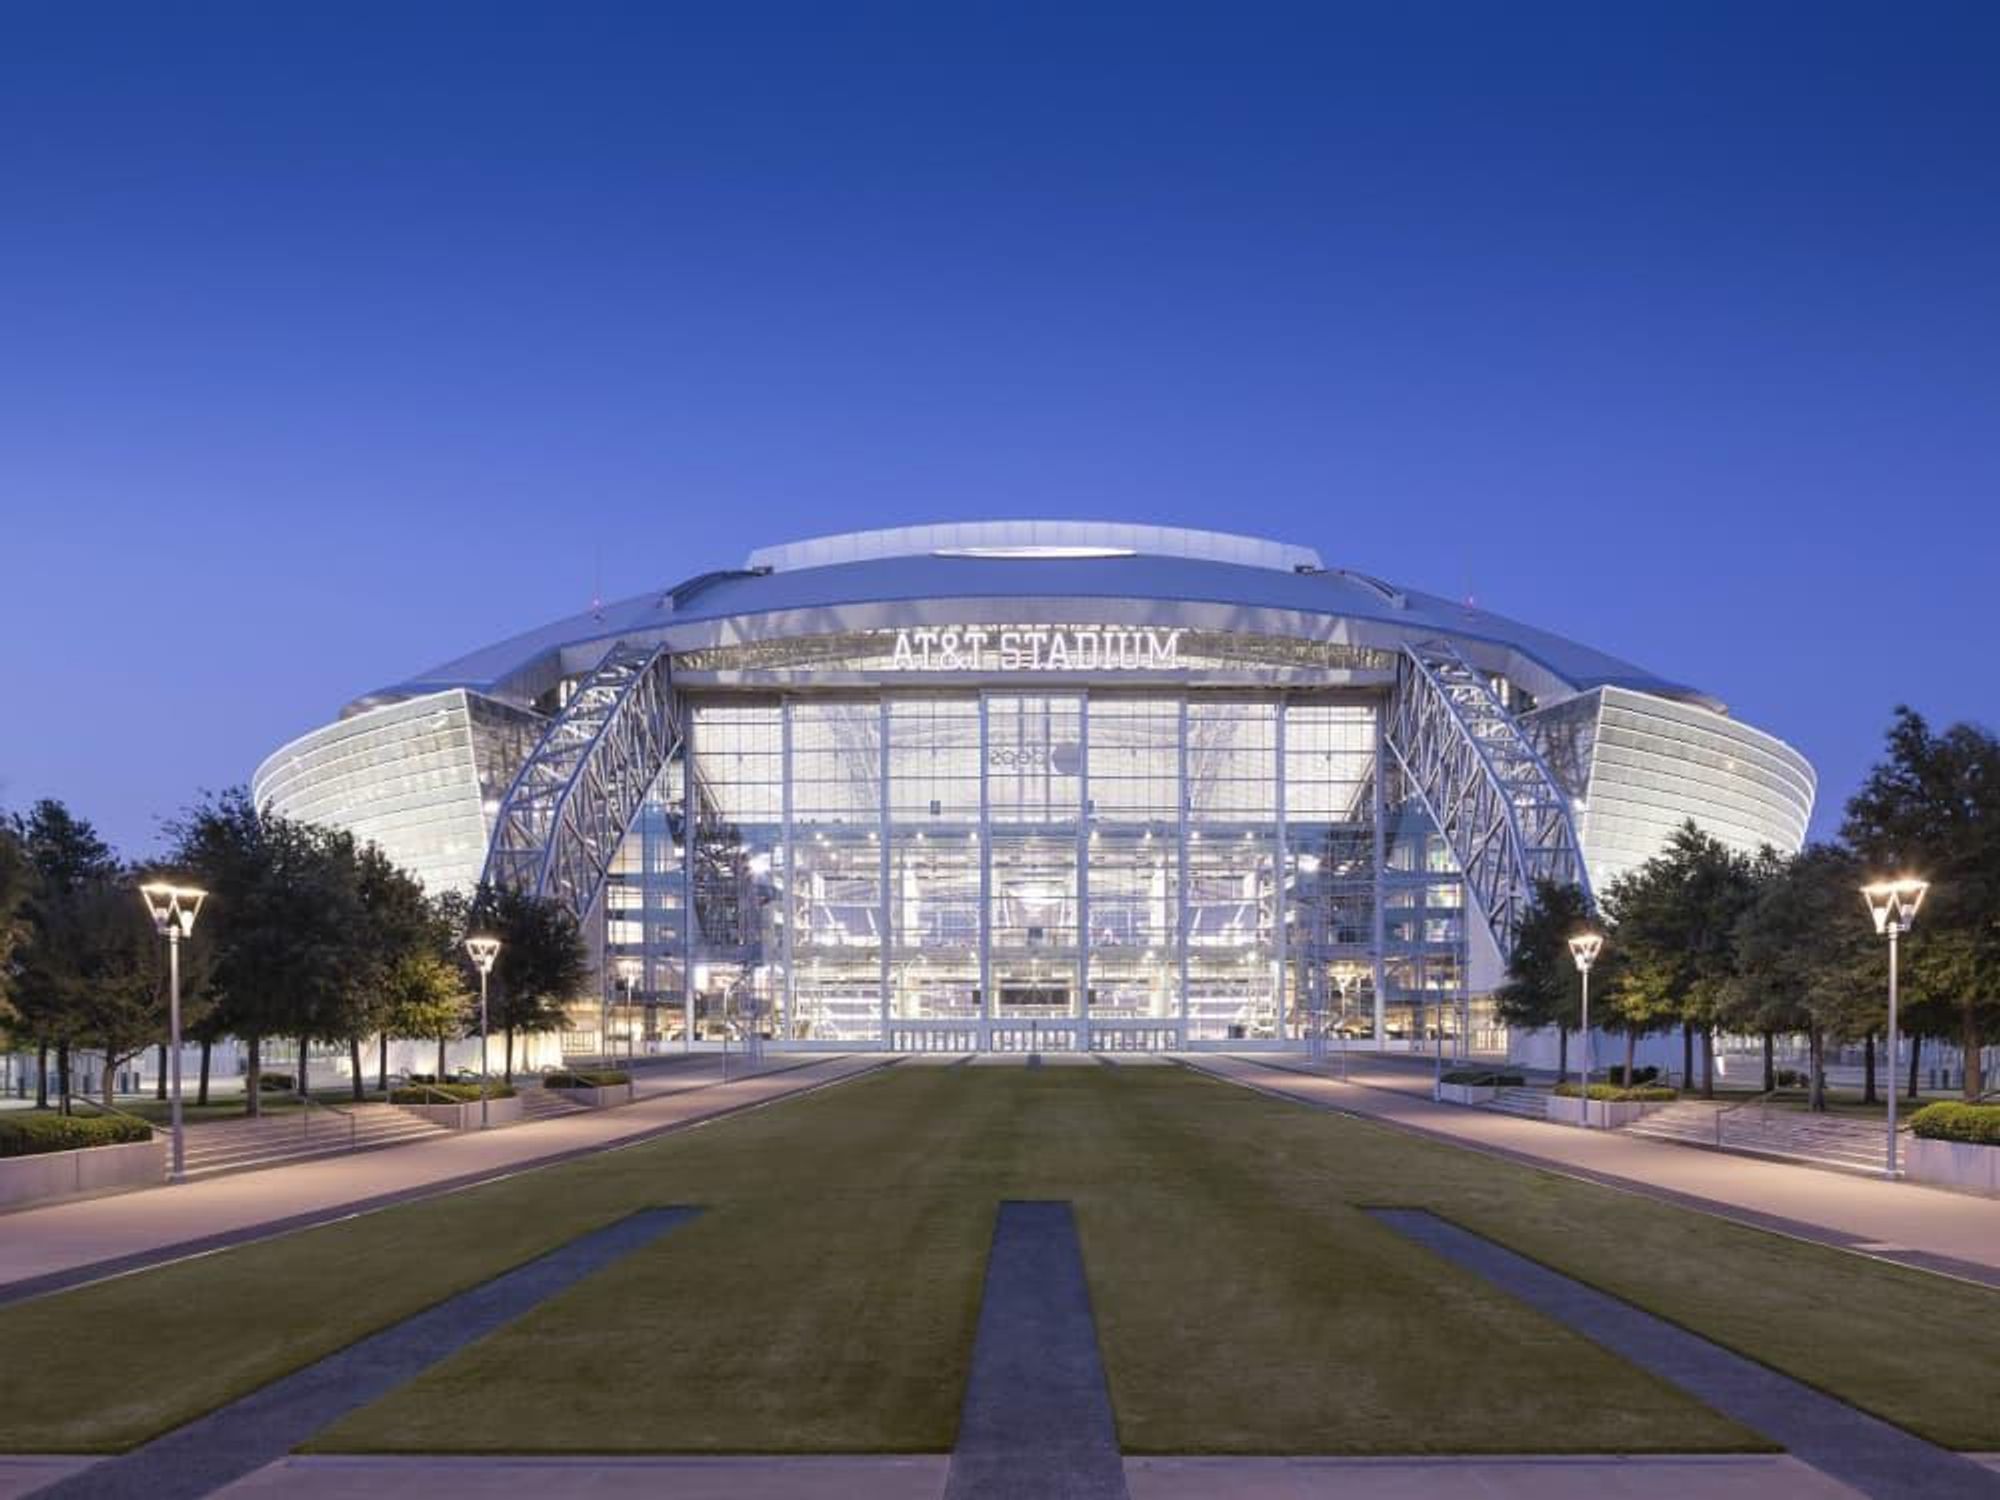 Dallas Cowboys' 2022 schedule set, features nine games at AT&T Stadium